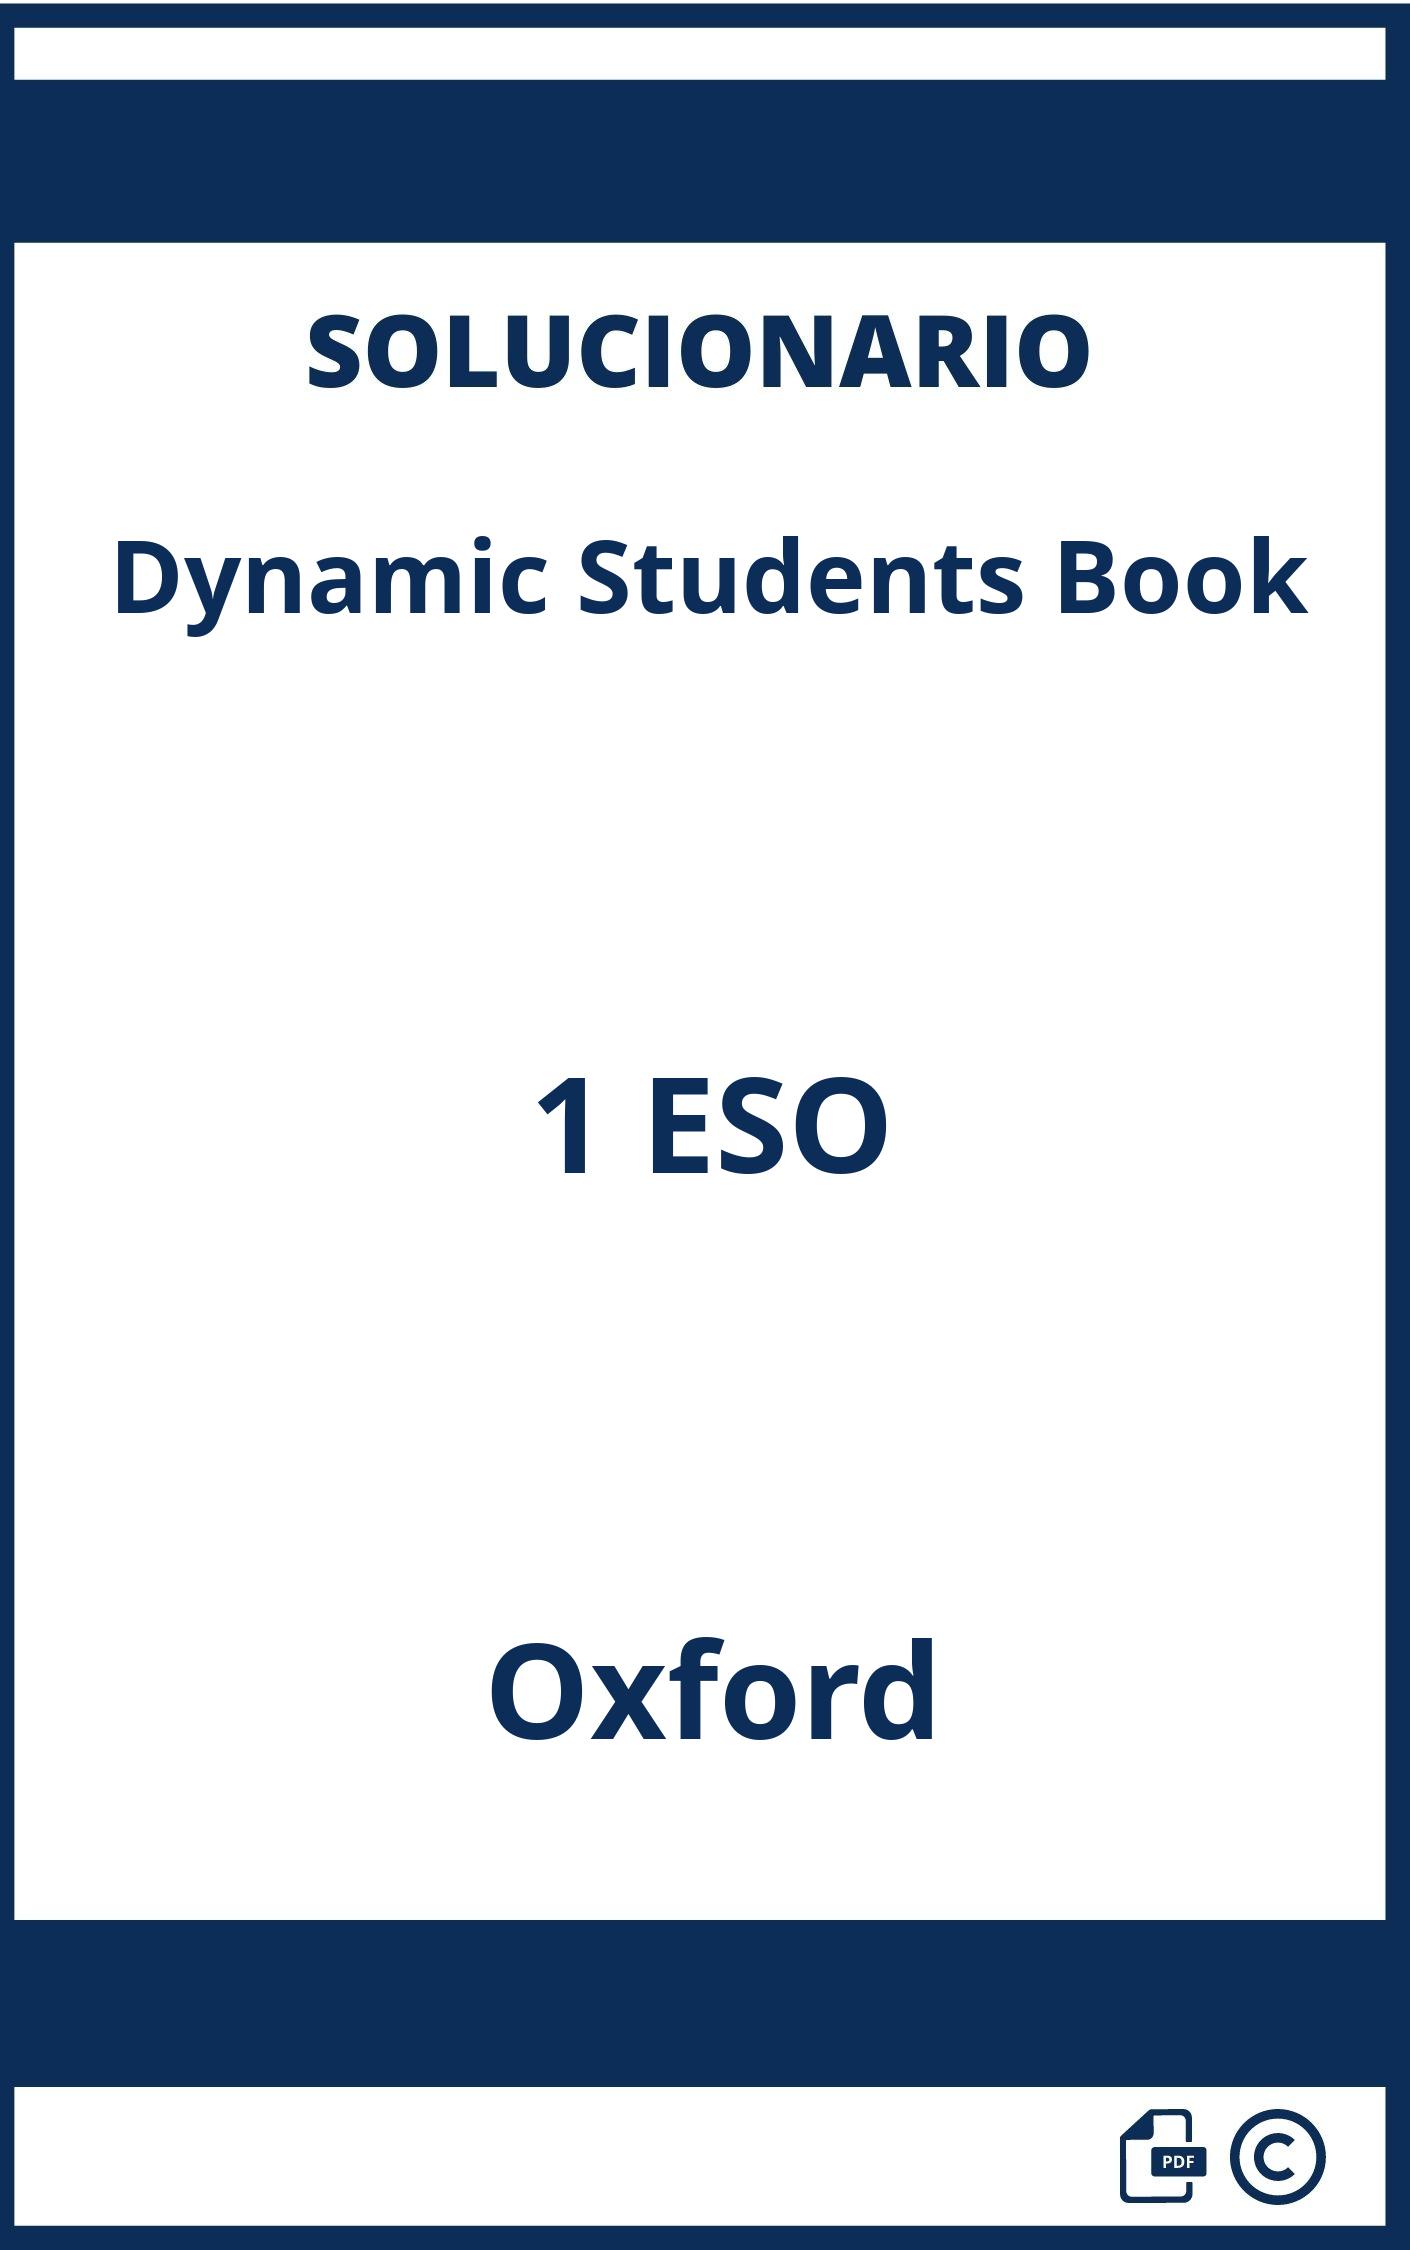 Solucionario Dynamic Students Book 1 ESO Oxford